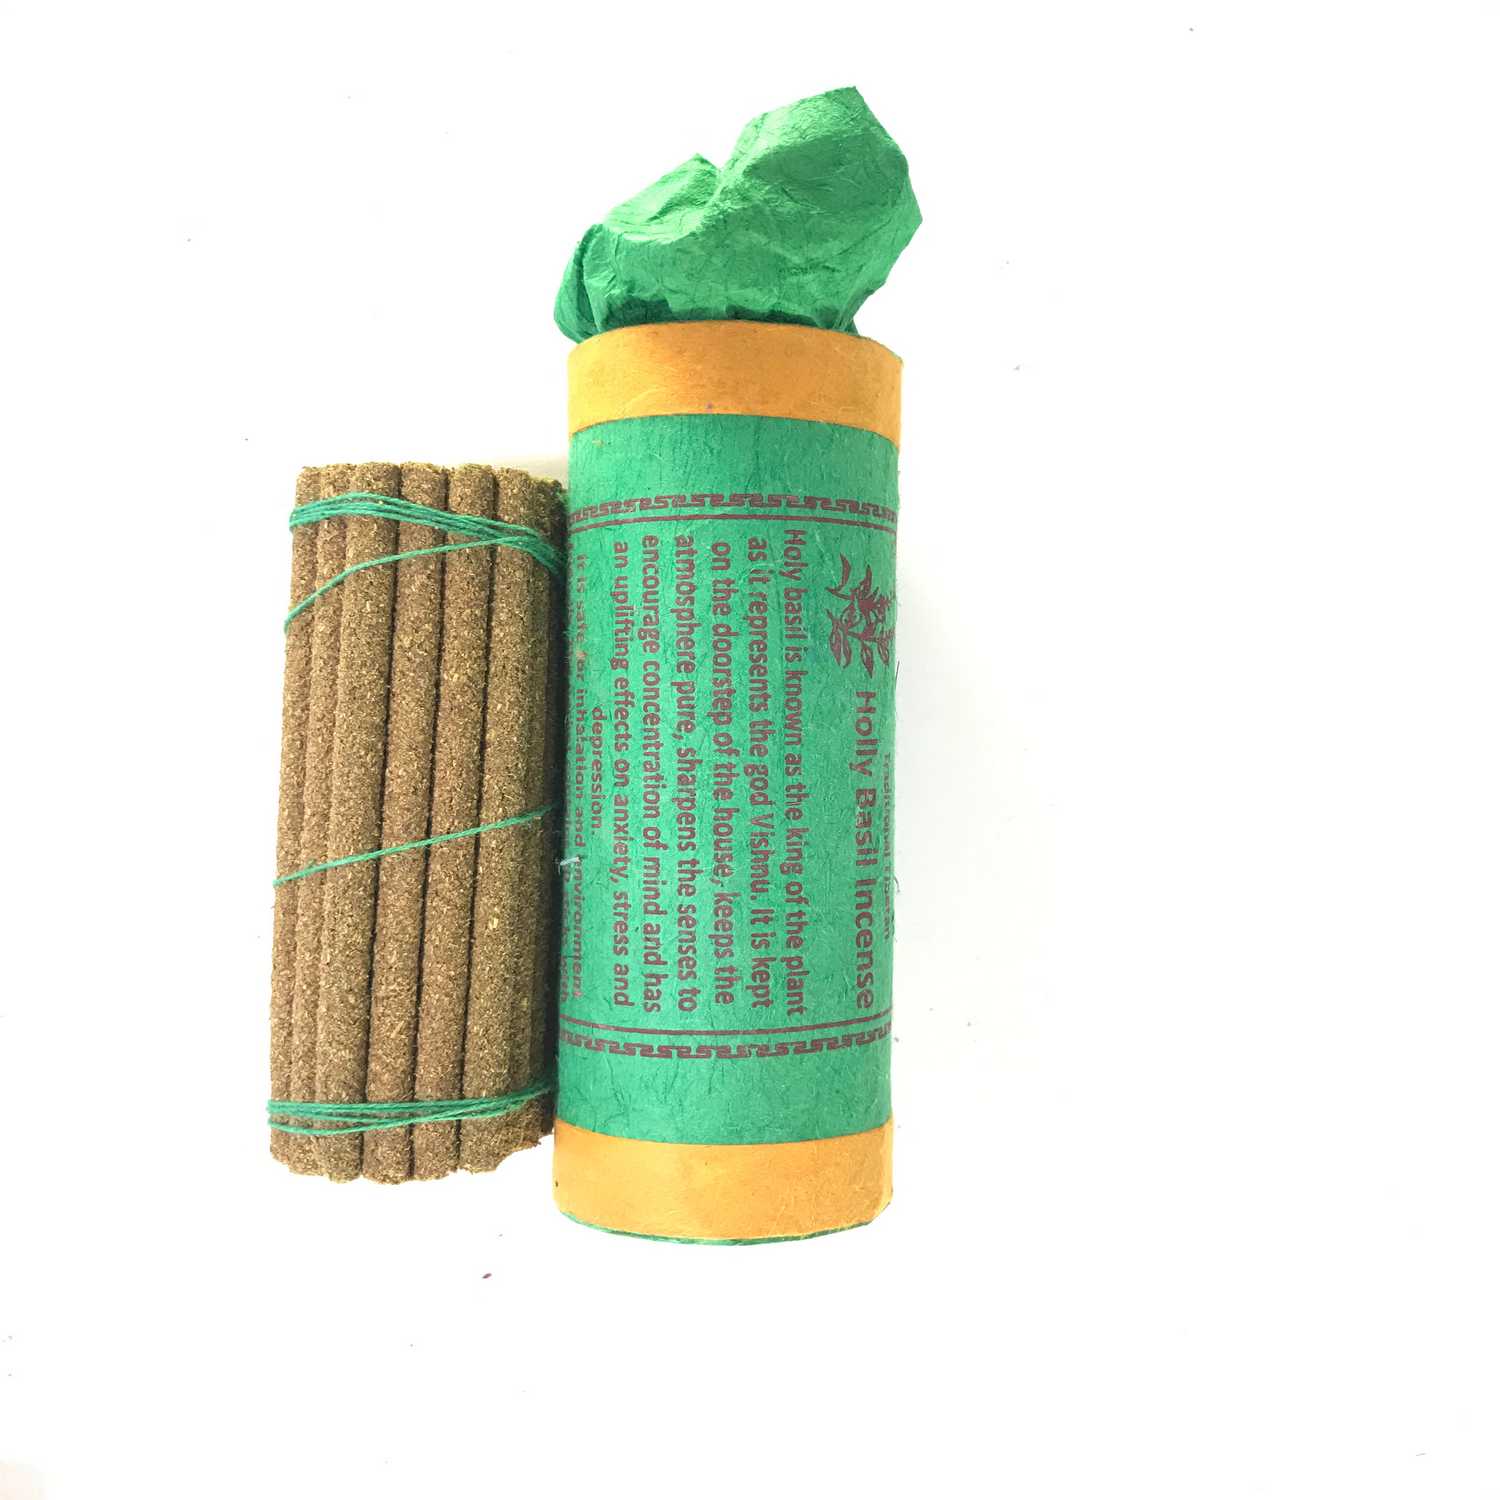 Holly Basil Incense: Tibetan Herbal Incense, 30 Sticks, incense Holder